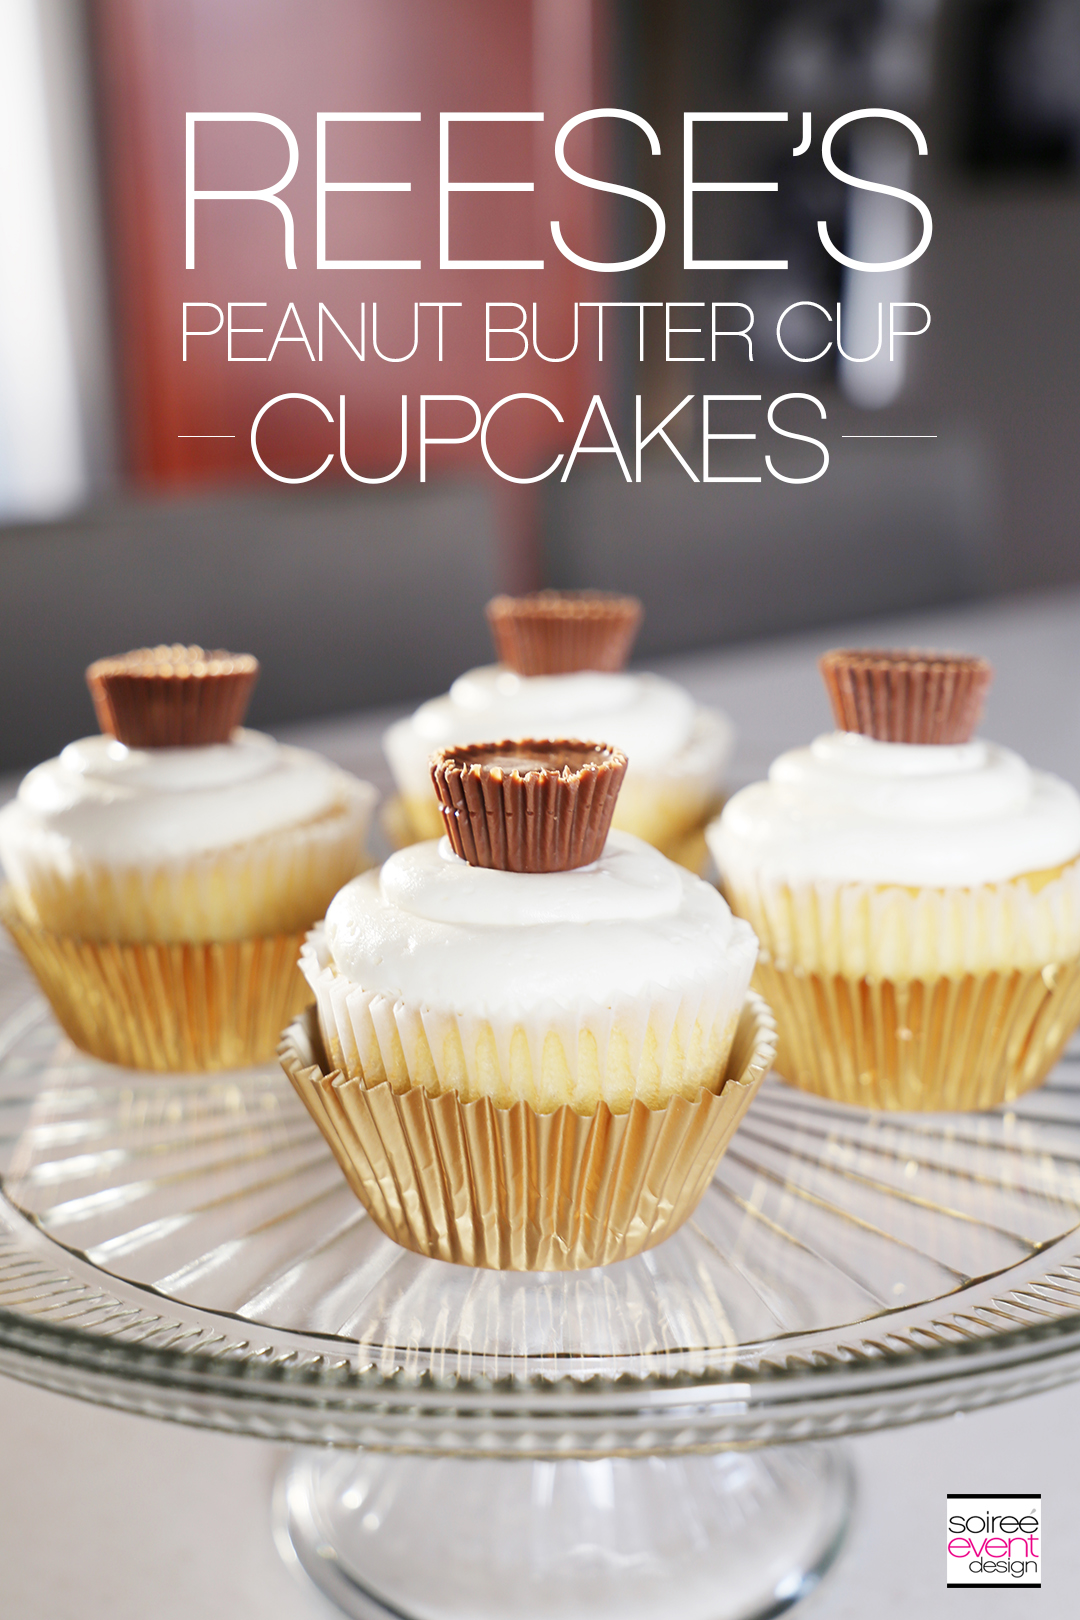 'S Peanut Butter Cup Cupcakes - Recipe